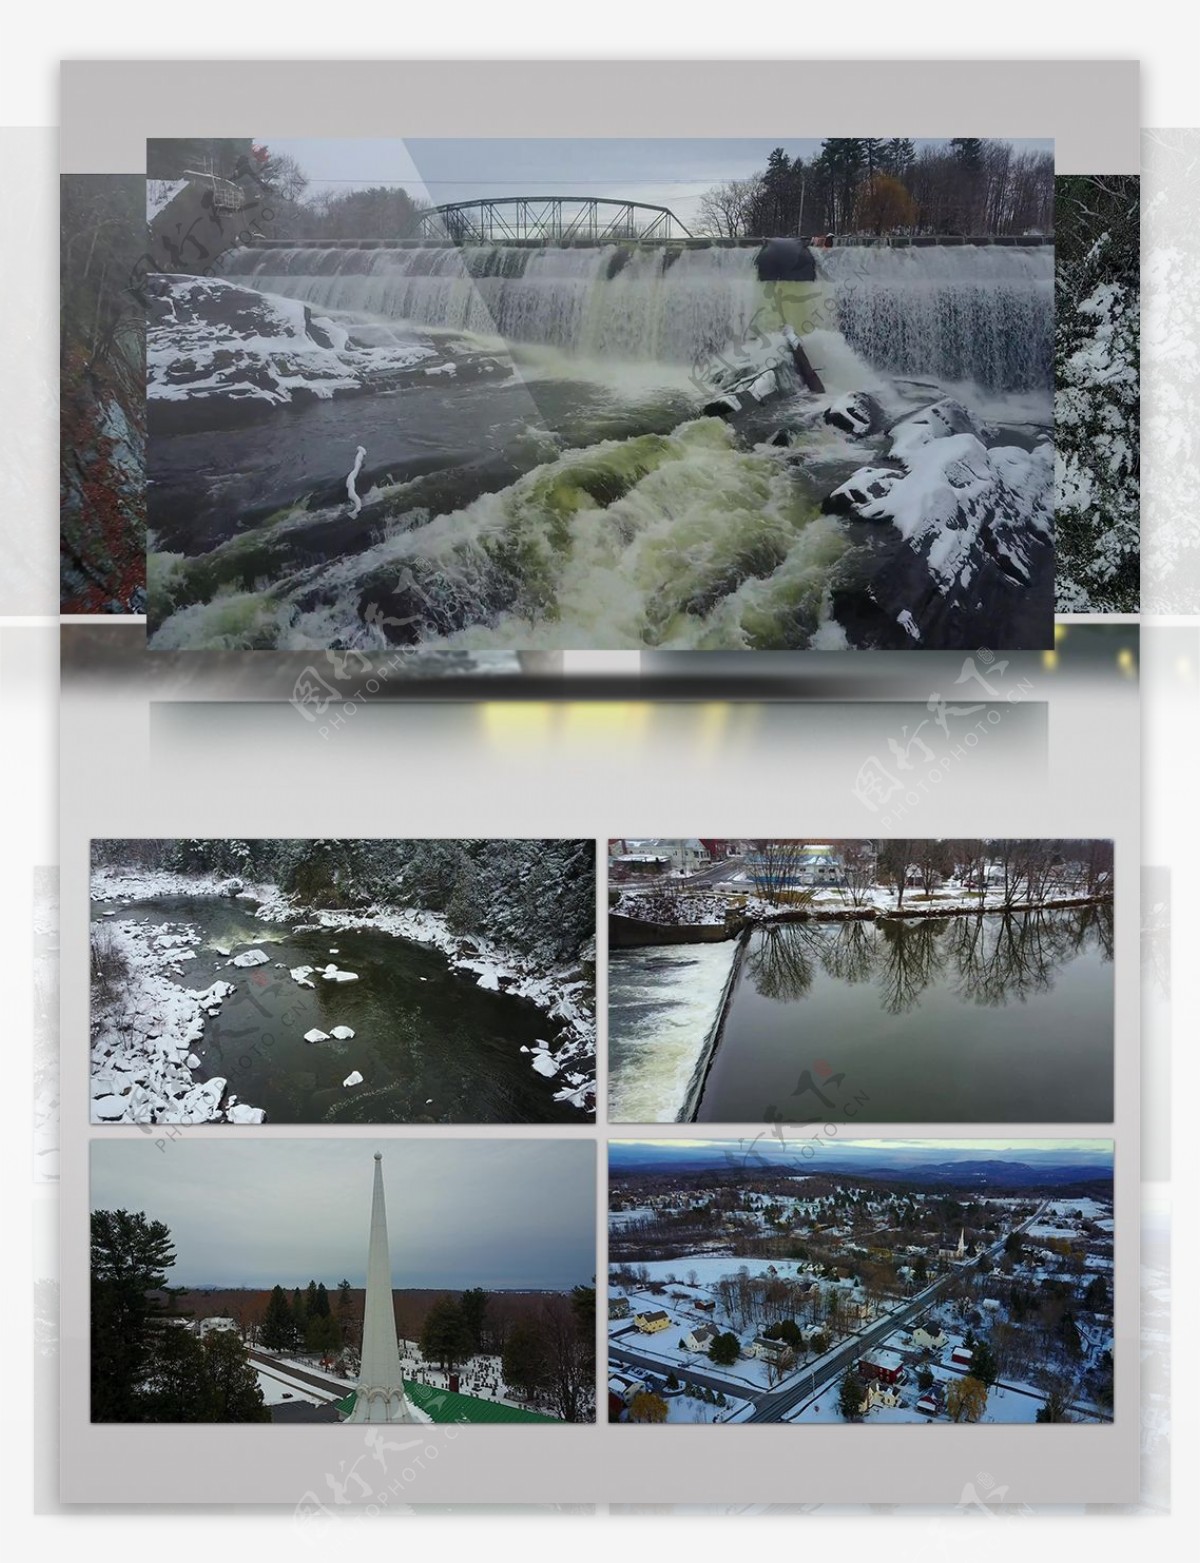 2K冬季景观桥梁流水瀑布车流航拍鸟瞰乡村旅游风景视频